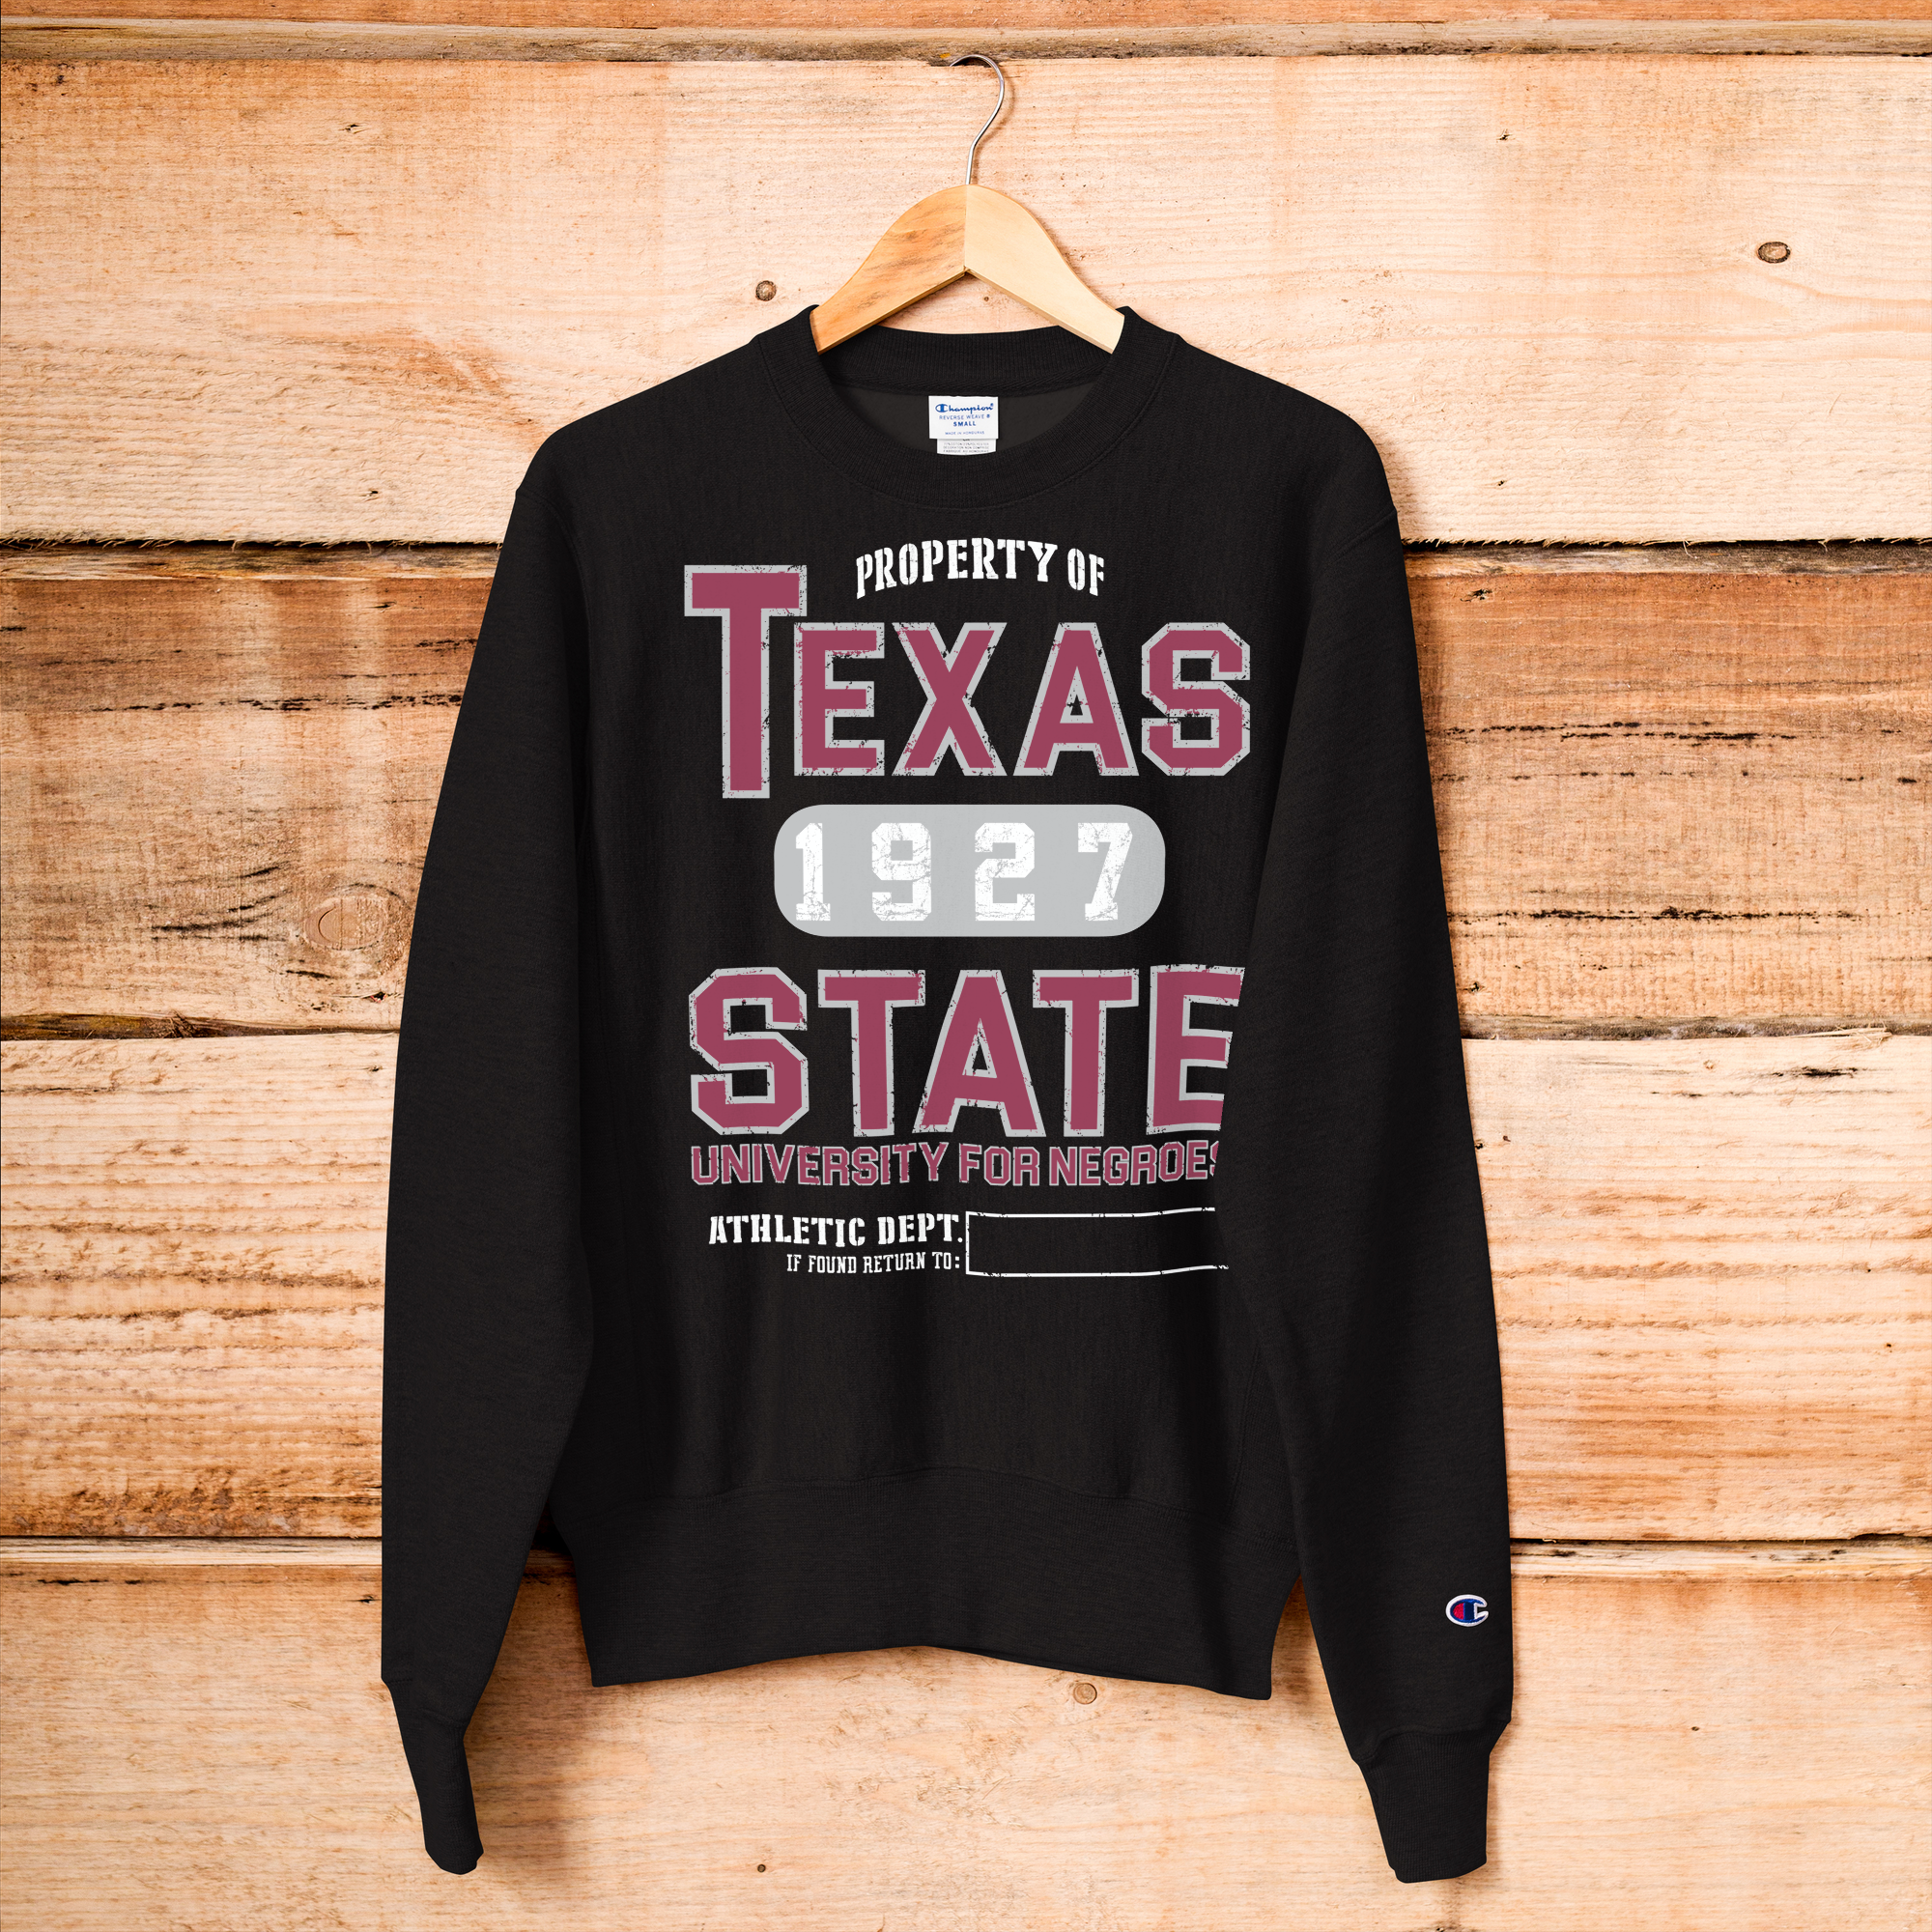 BCU X Champion Sweatshirt - Texas Southern